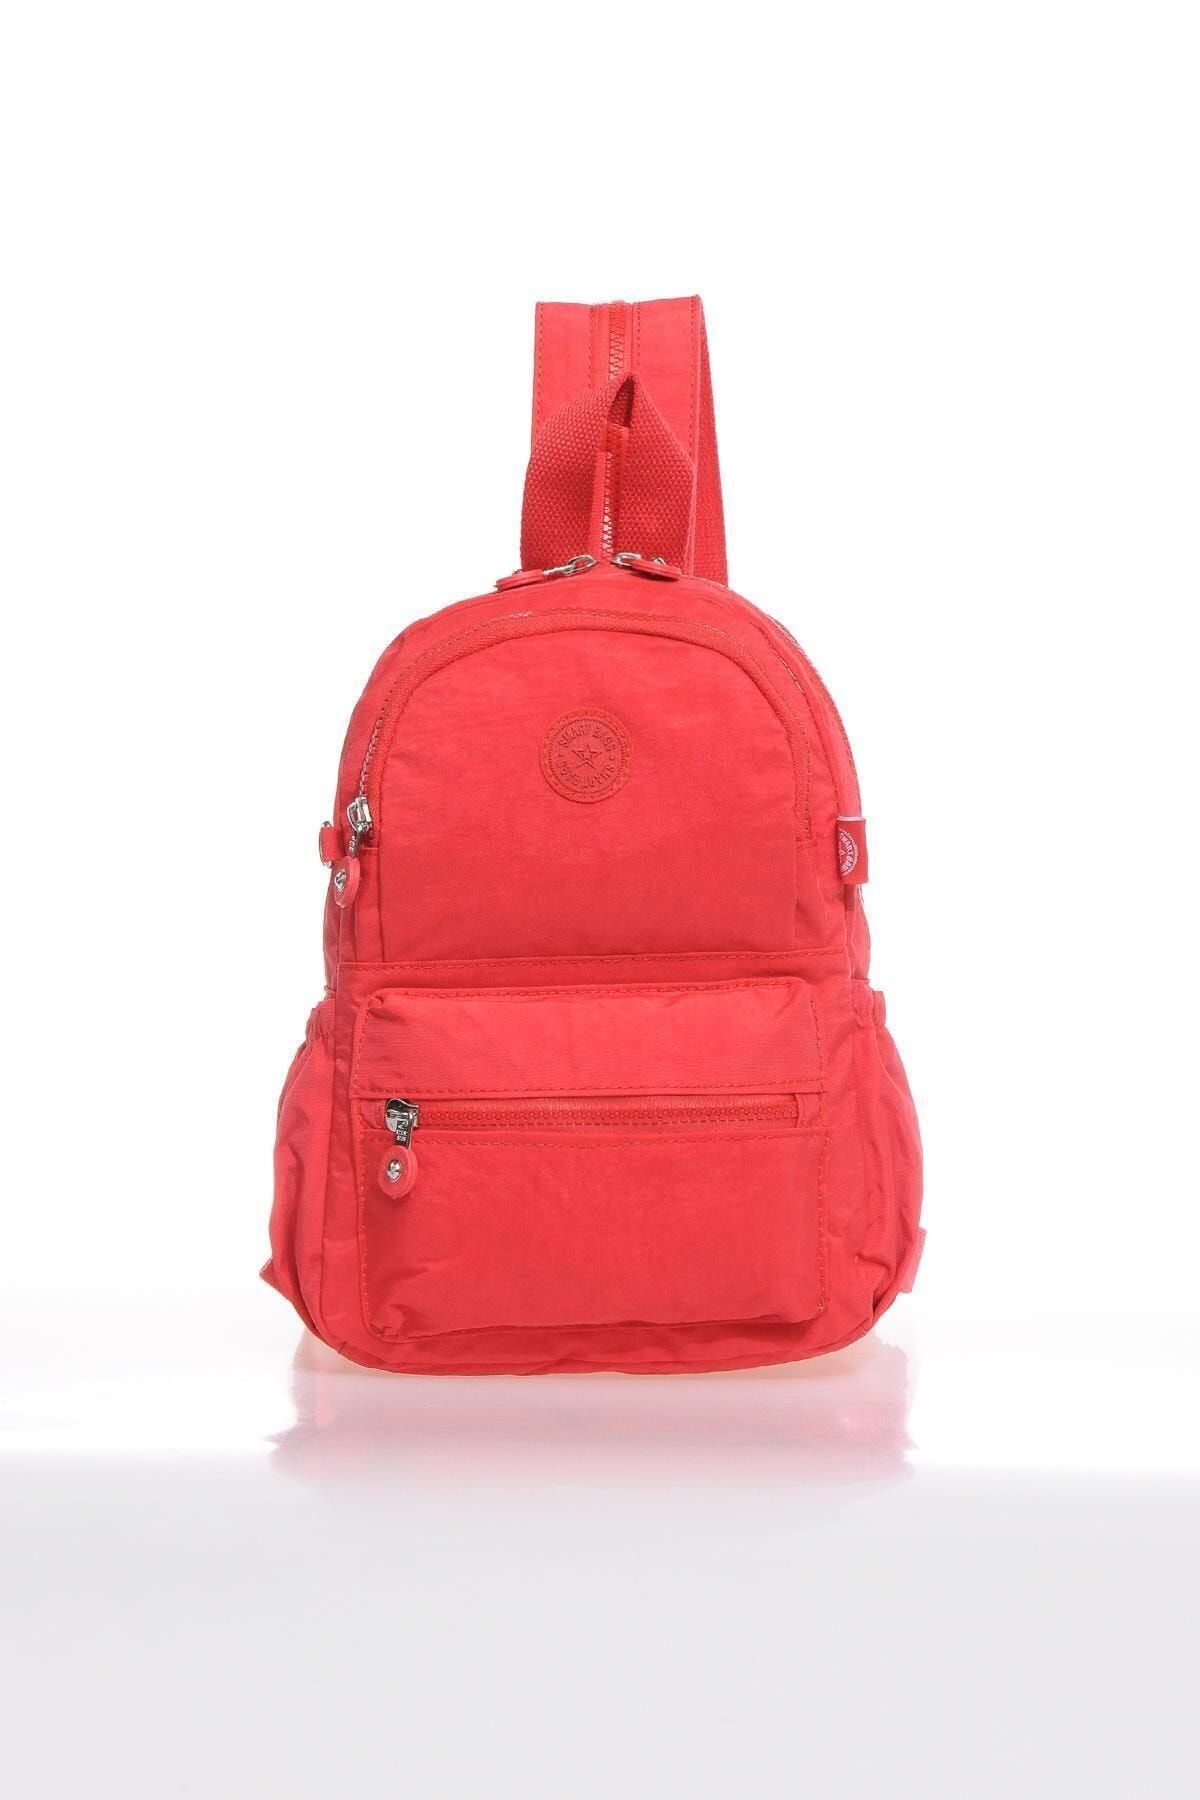 Smart Bags Smb1030 Kırmızı-0019 Kadın Sırt Çantası